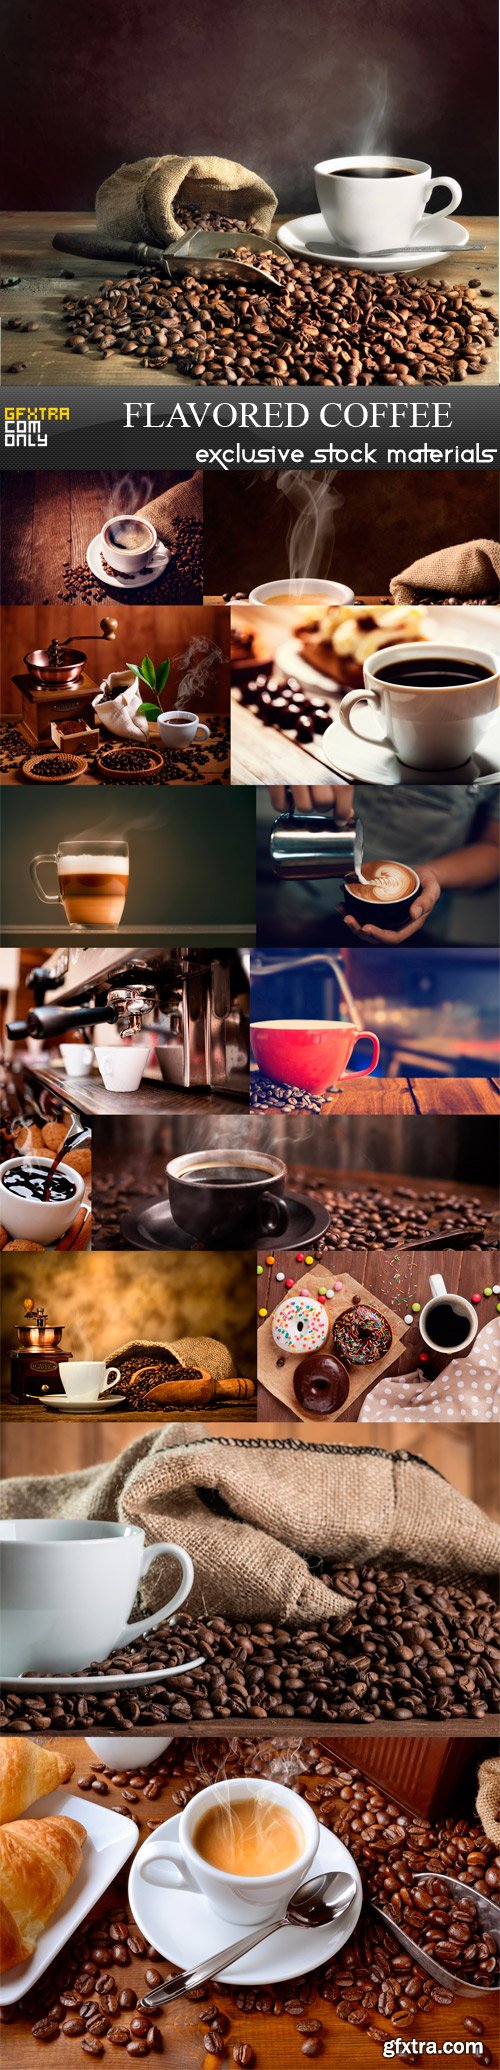 Flavored coffee - 15 UHQ JPEG